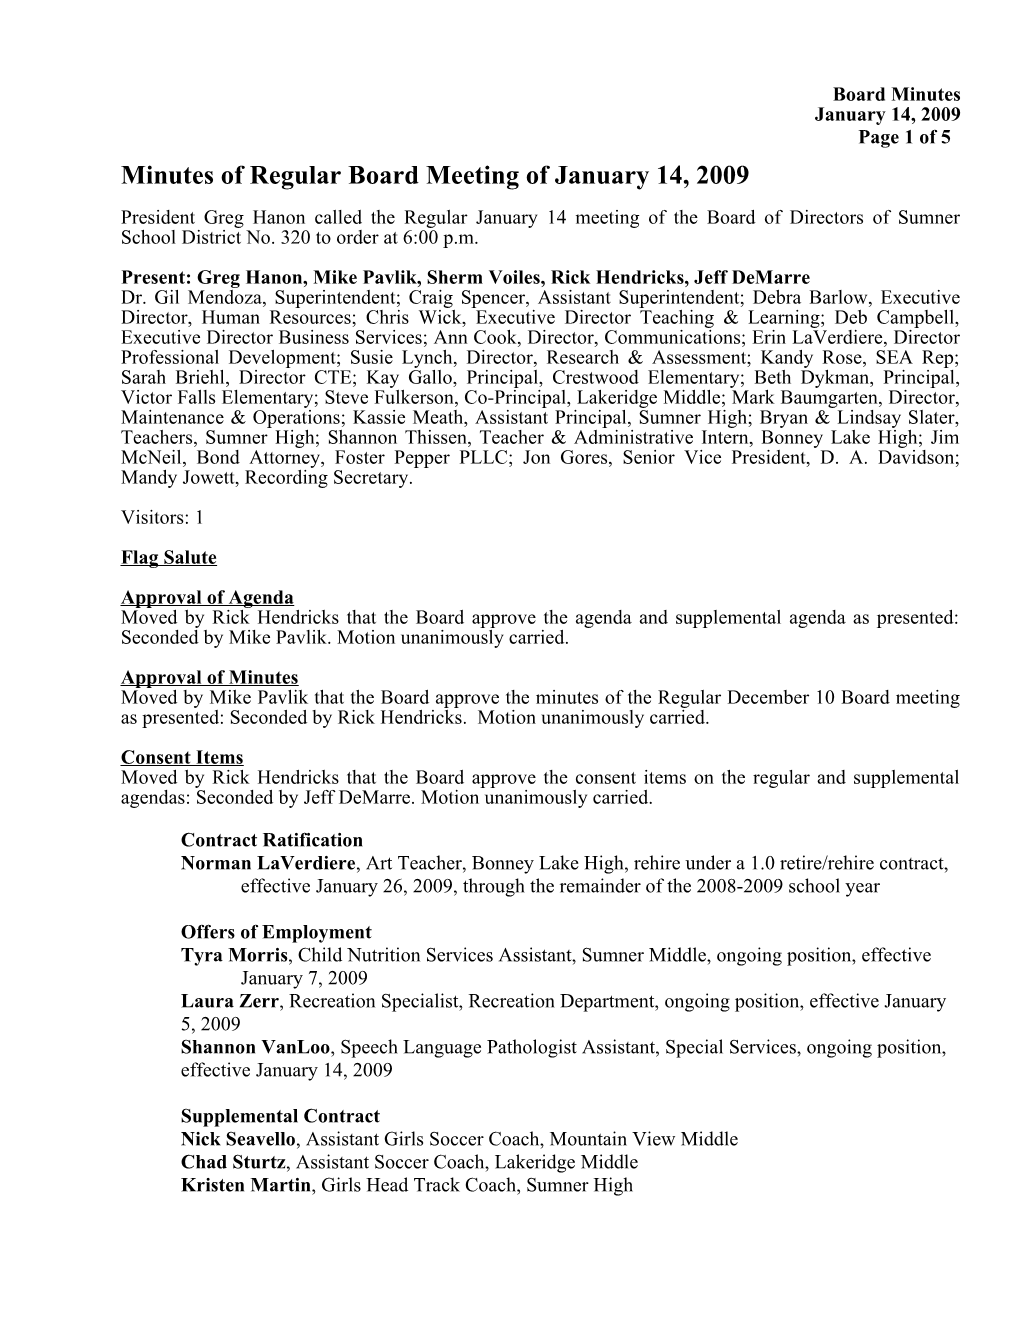 Minutes of Regular Board Meeting of January 14, 2009